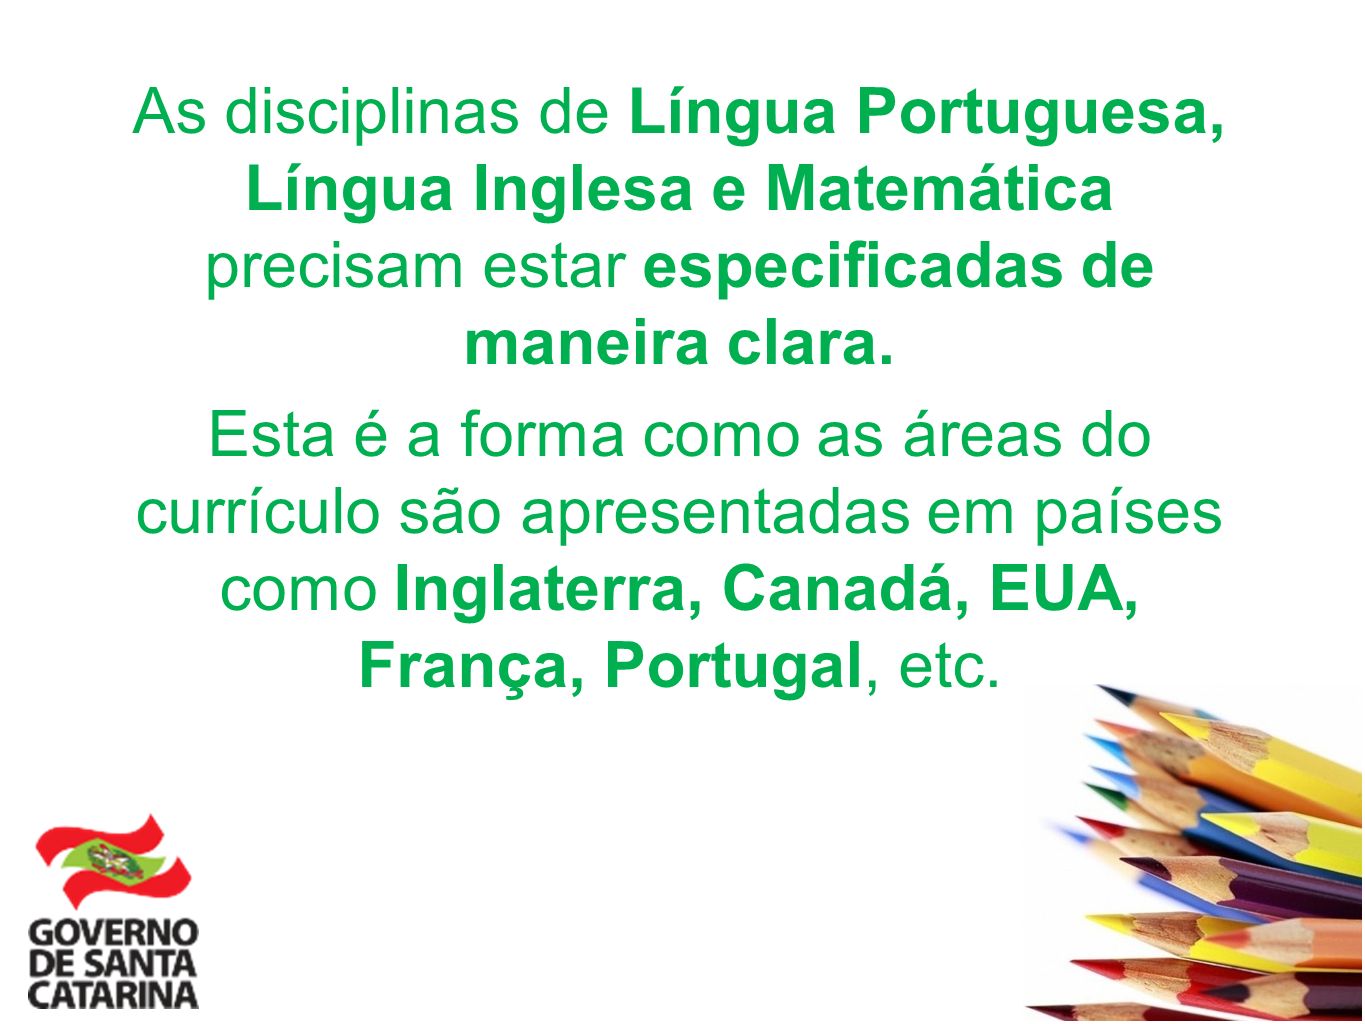 As disciplinas de Língua Portuguesa, Língua Inglesa e Matemática precisam estar especificadas de maneira clara.